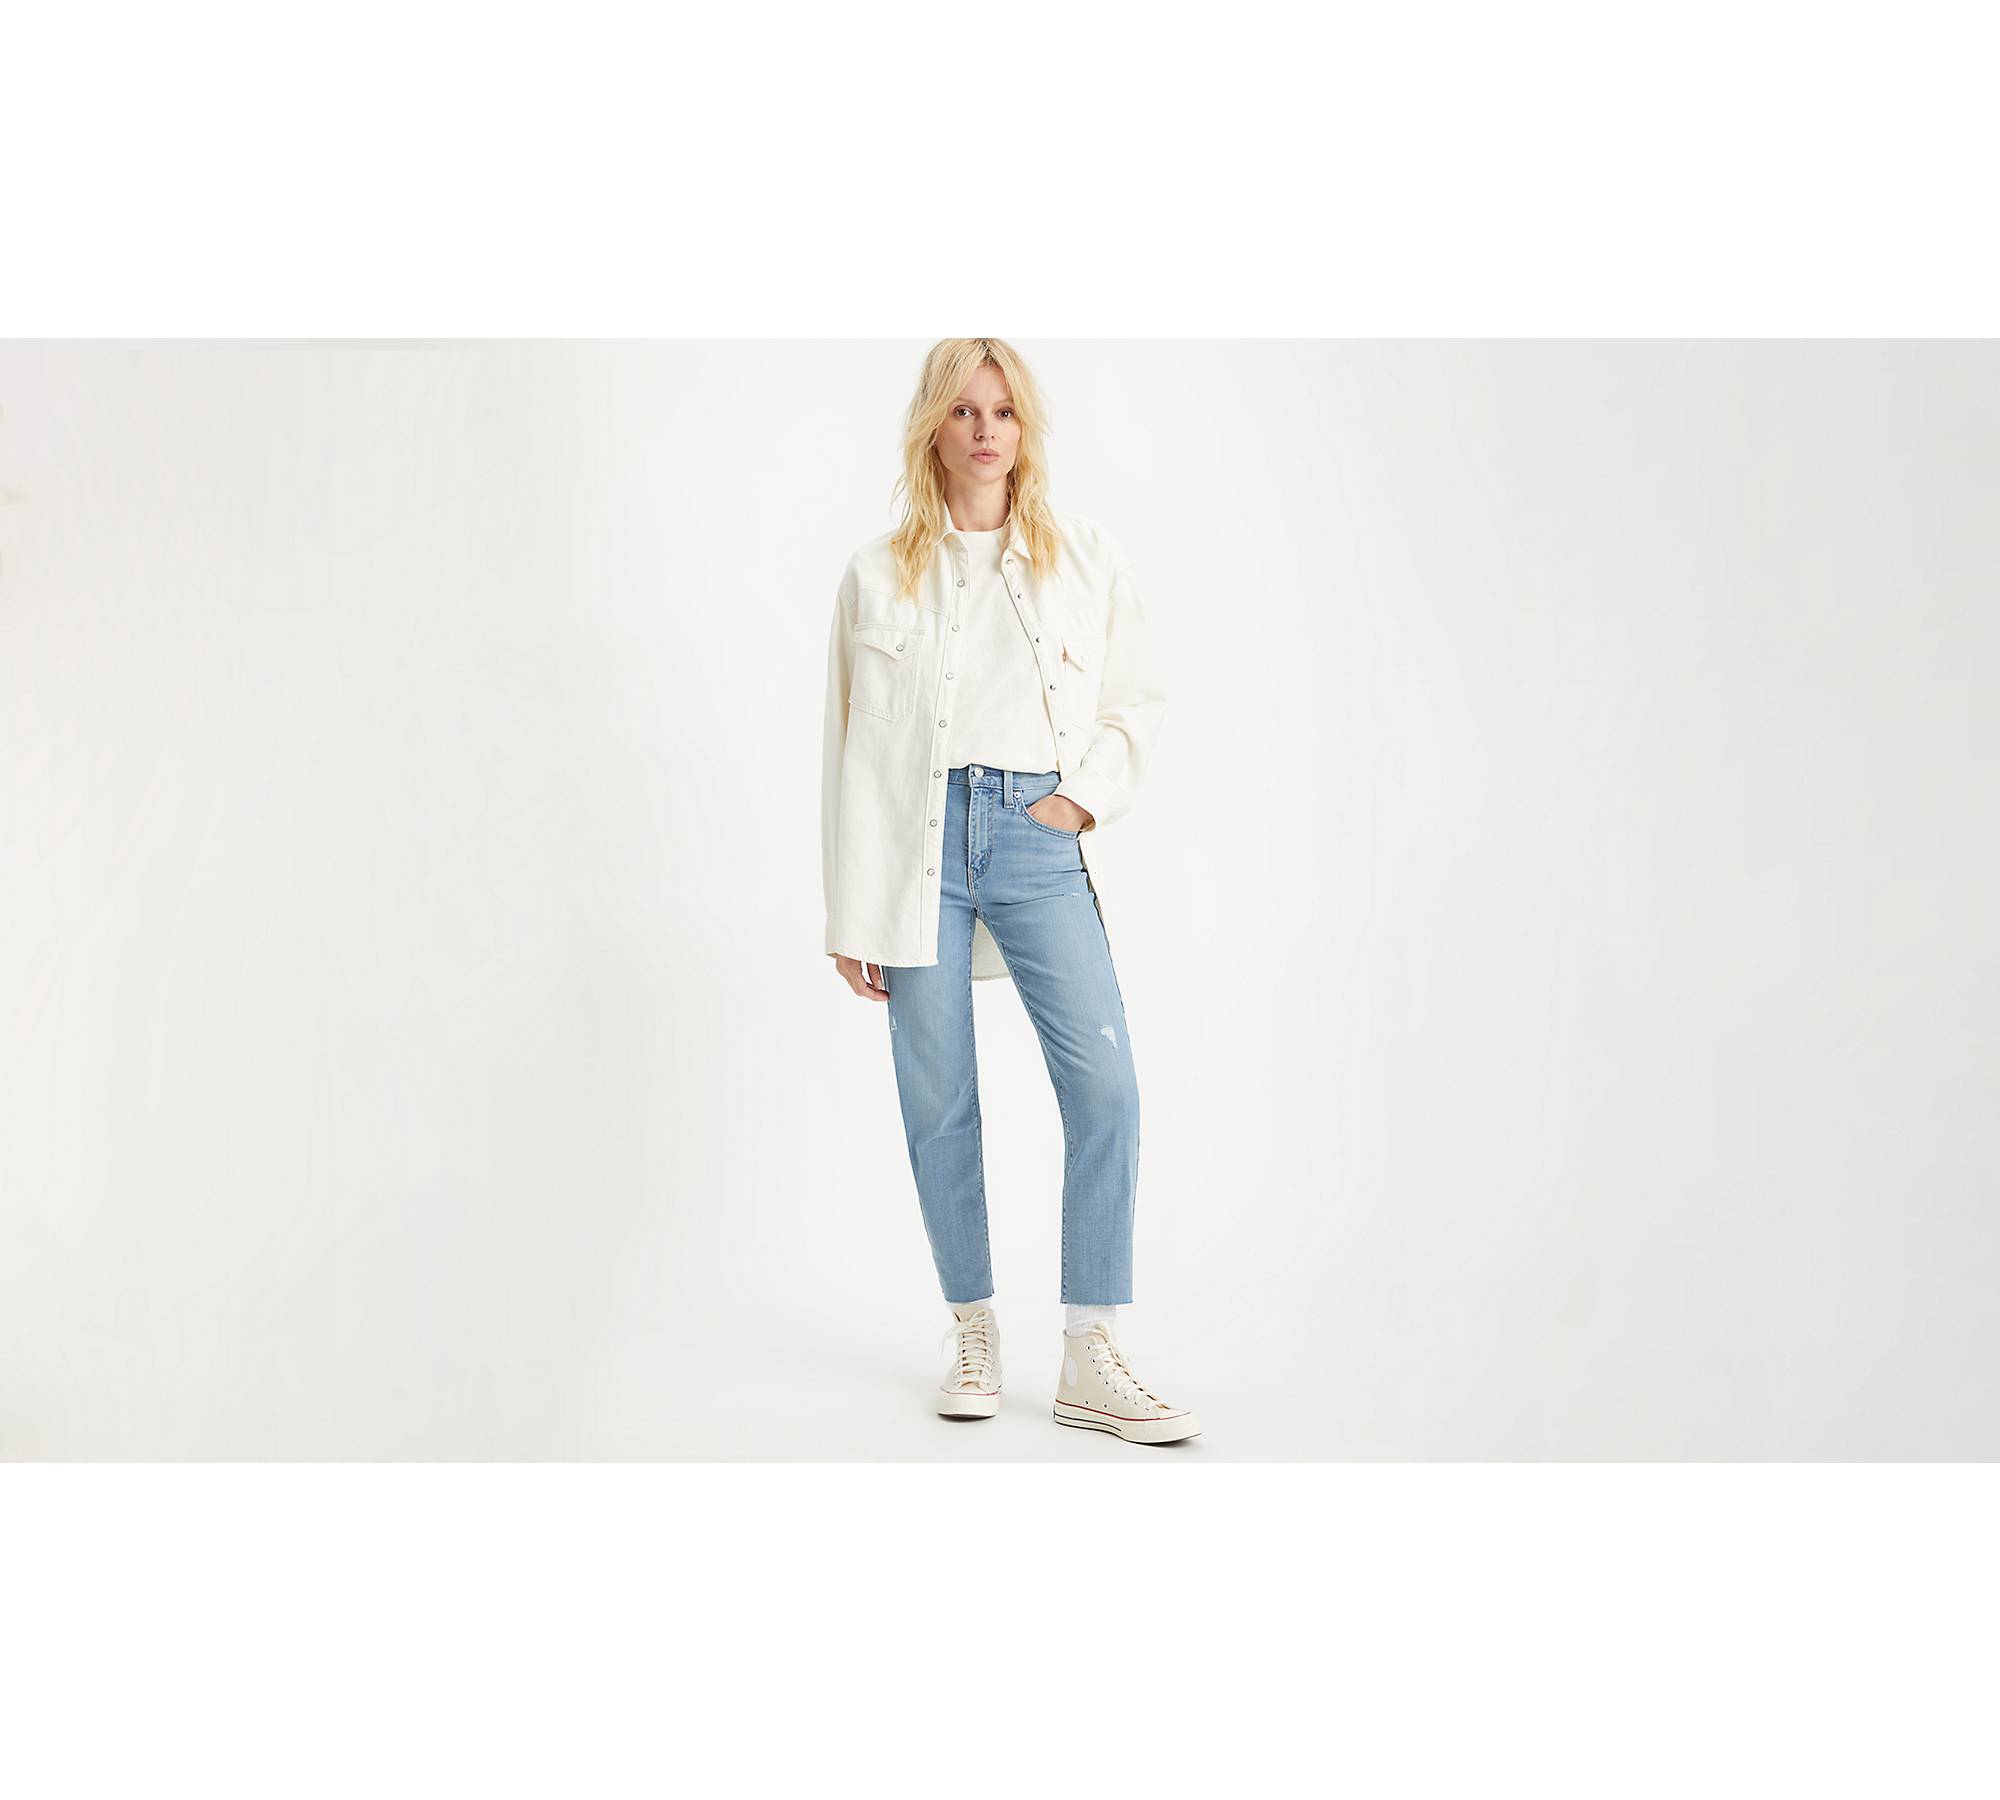 Savvy interferens Danmark Jeans, Denim Jackets & Clothing